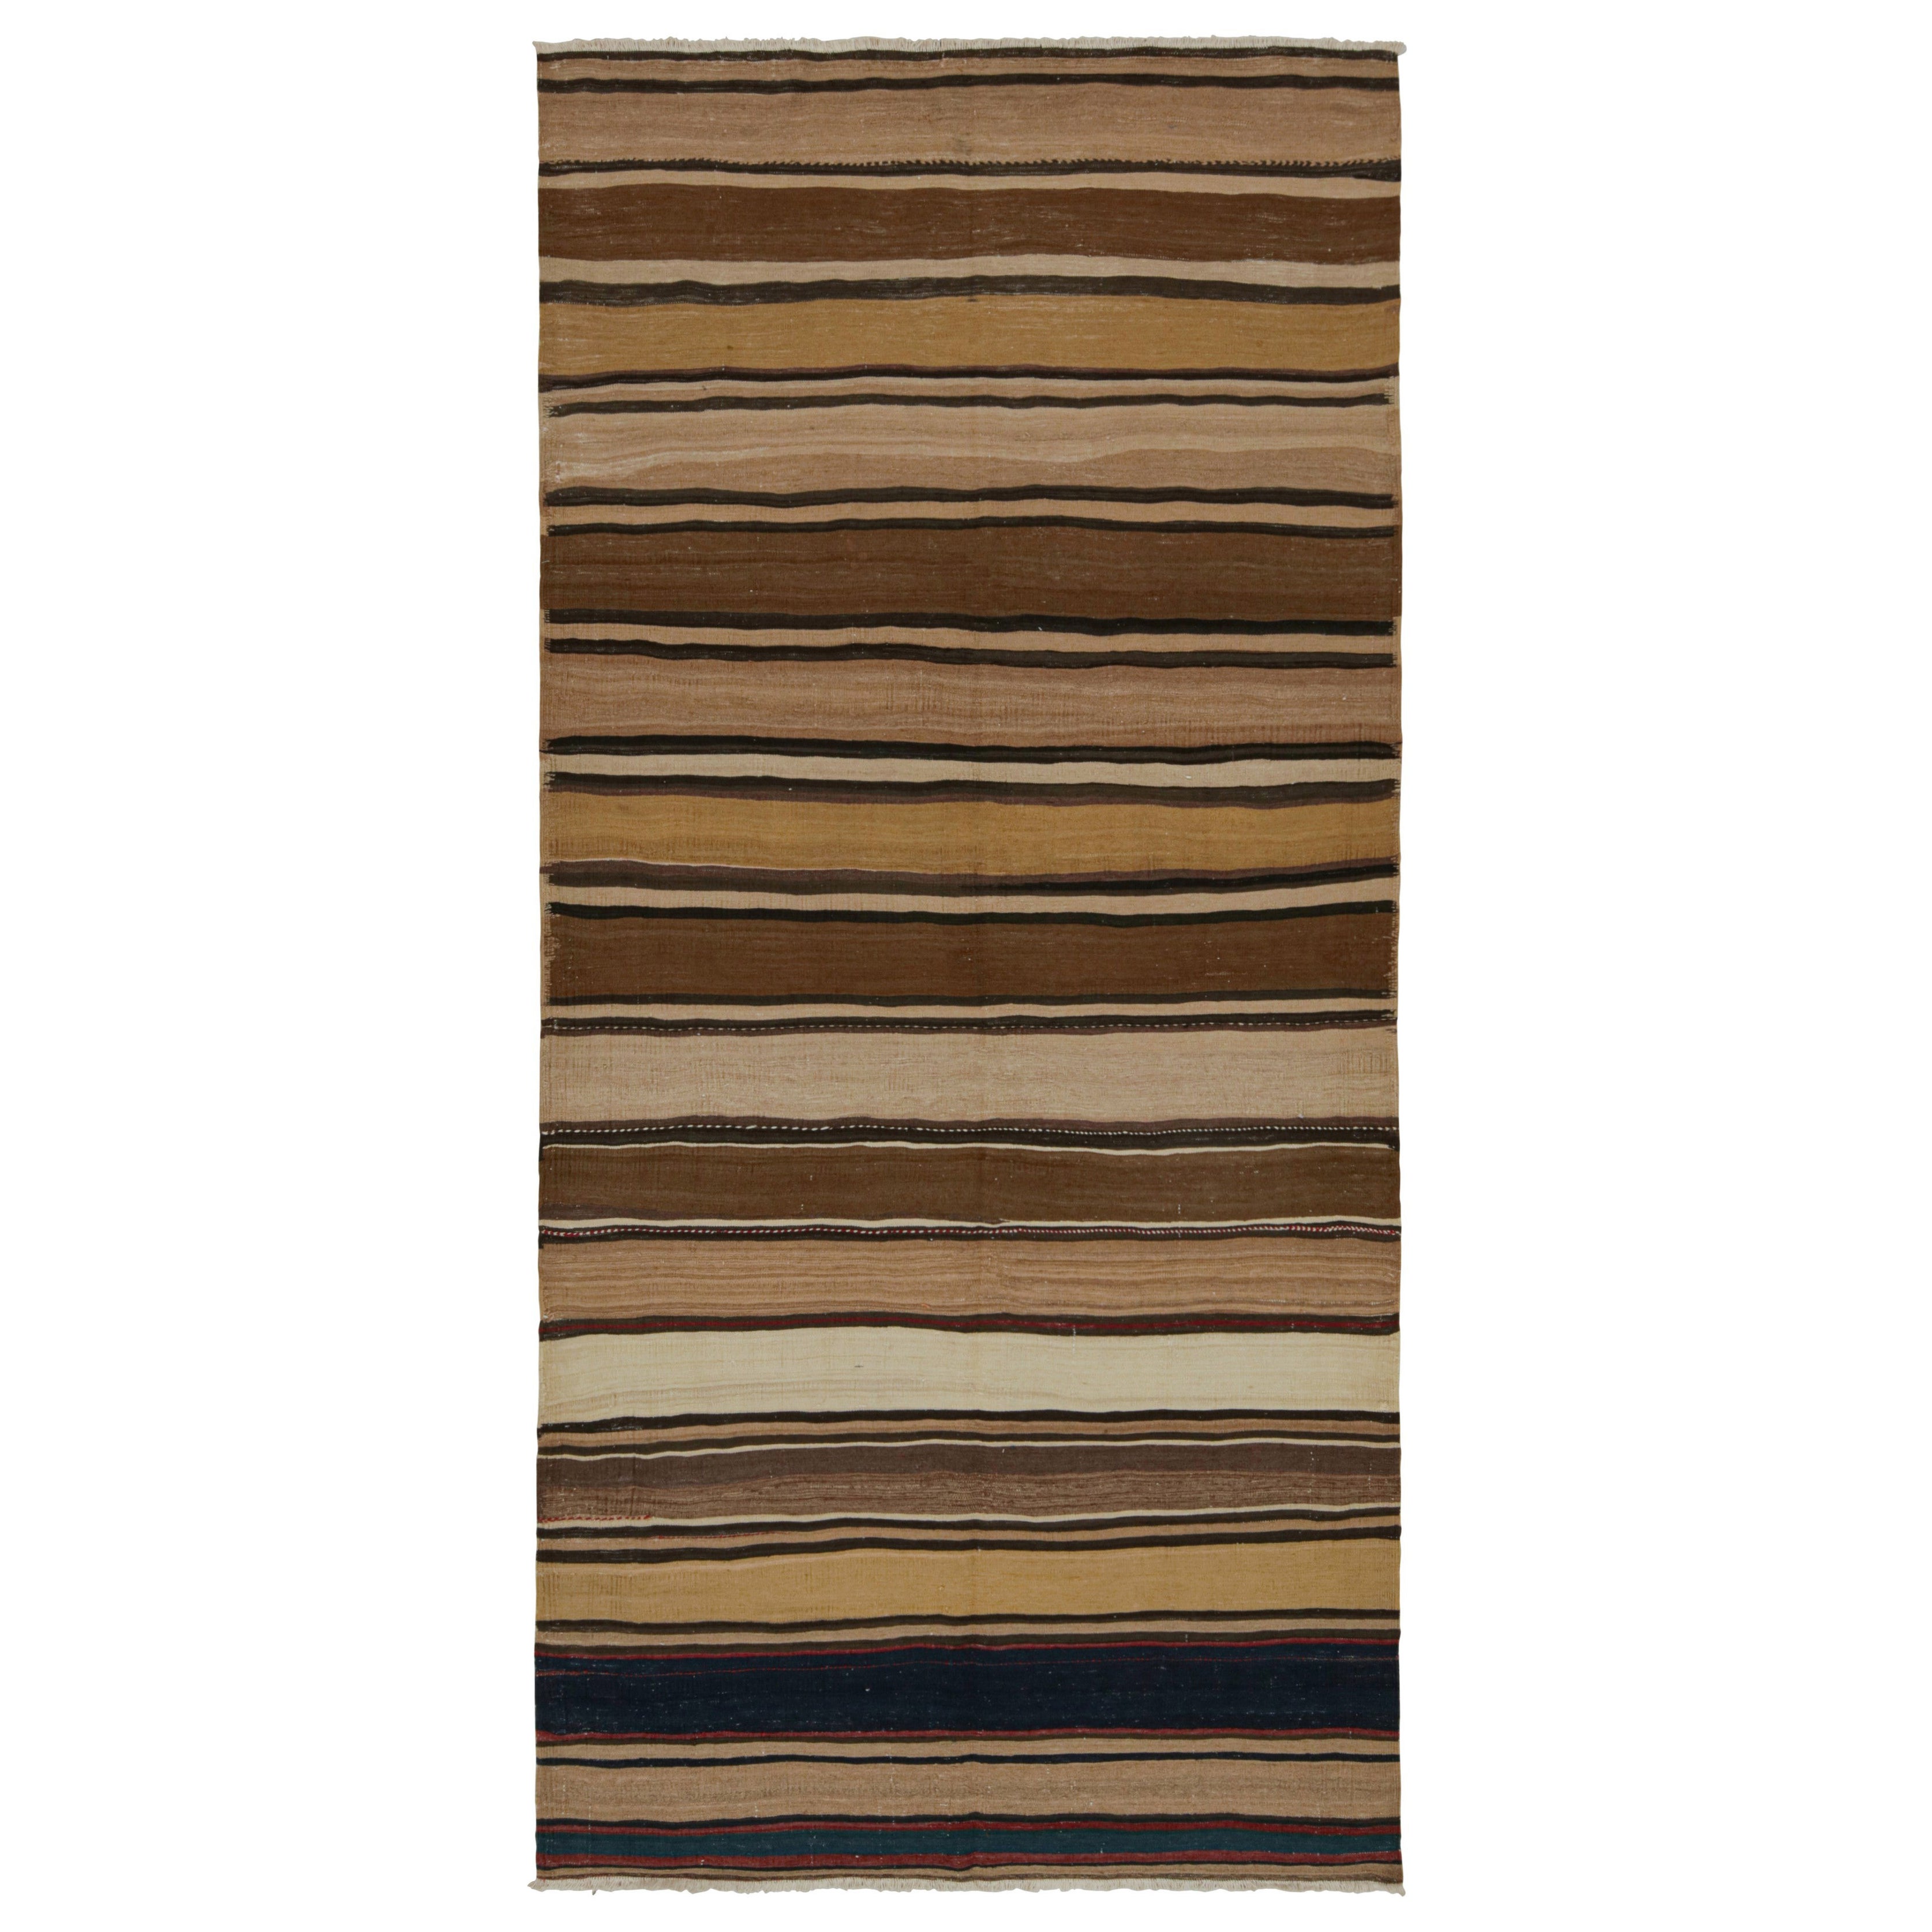 Vintage Afghani tribal Kilim rug, with Stripes, from Rug & Kilim For Sale